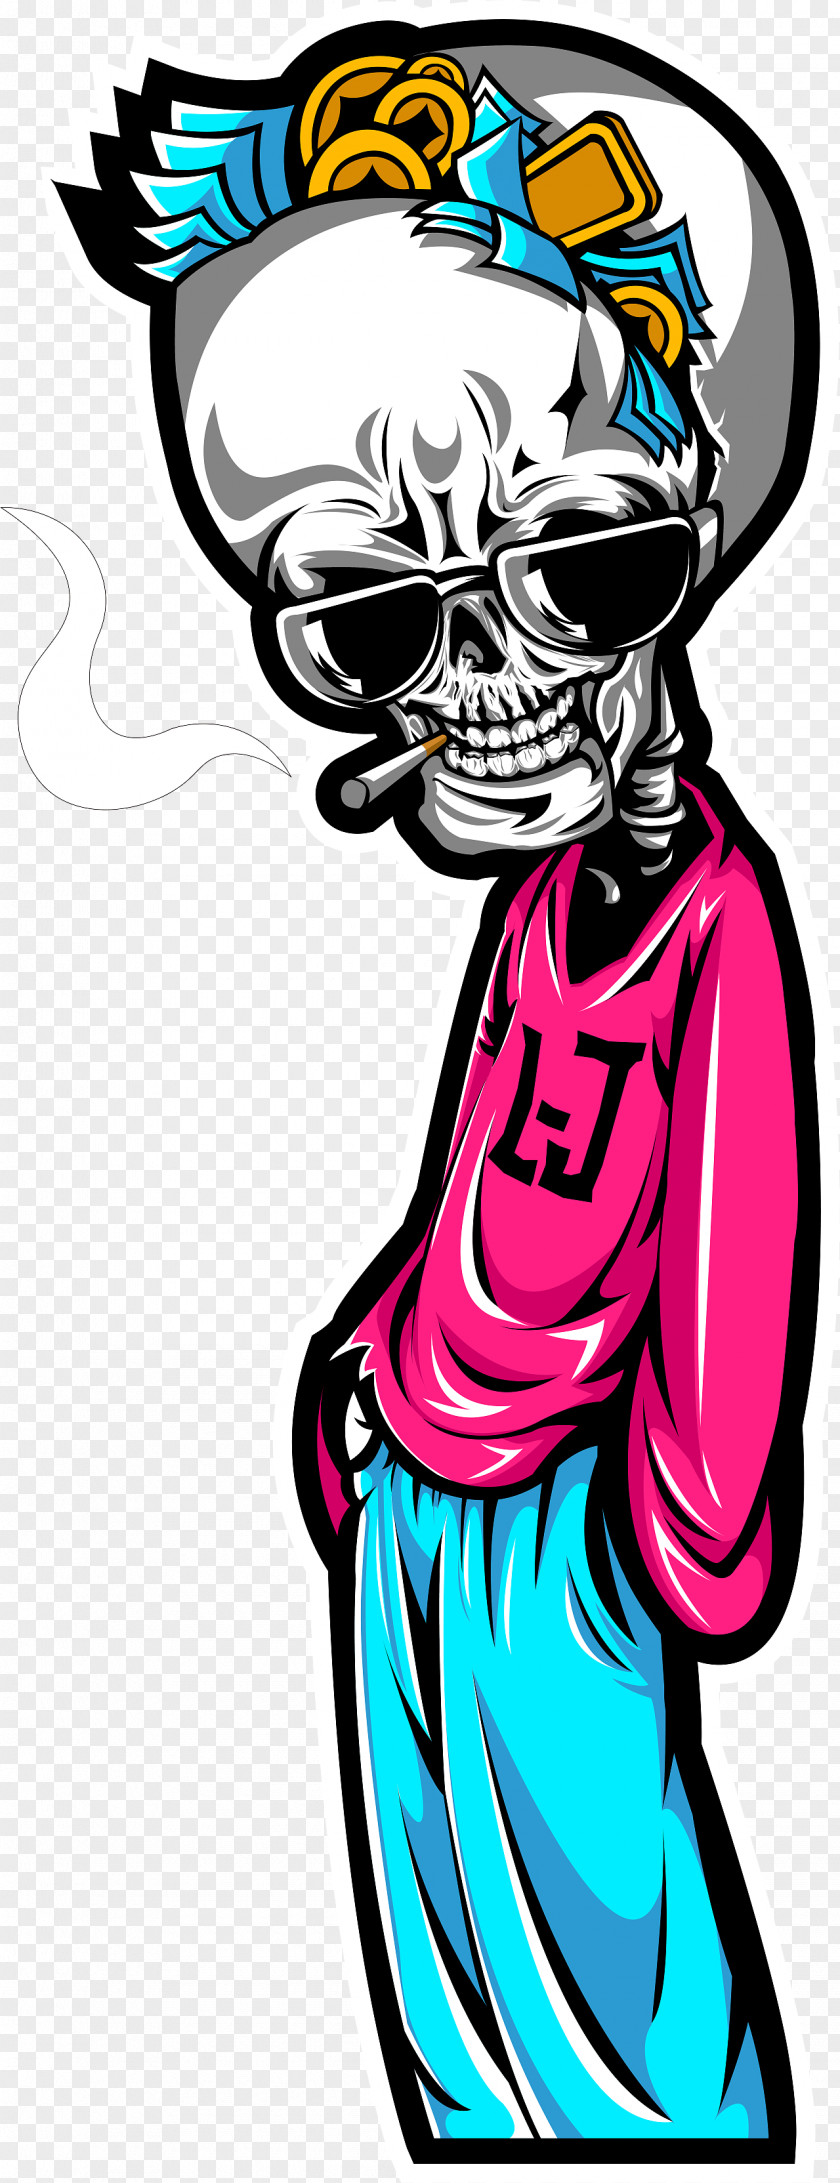 Bonehead Banner Clip Art Illustration Graphic Design Cartoon Character PNG